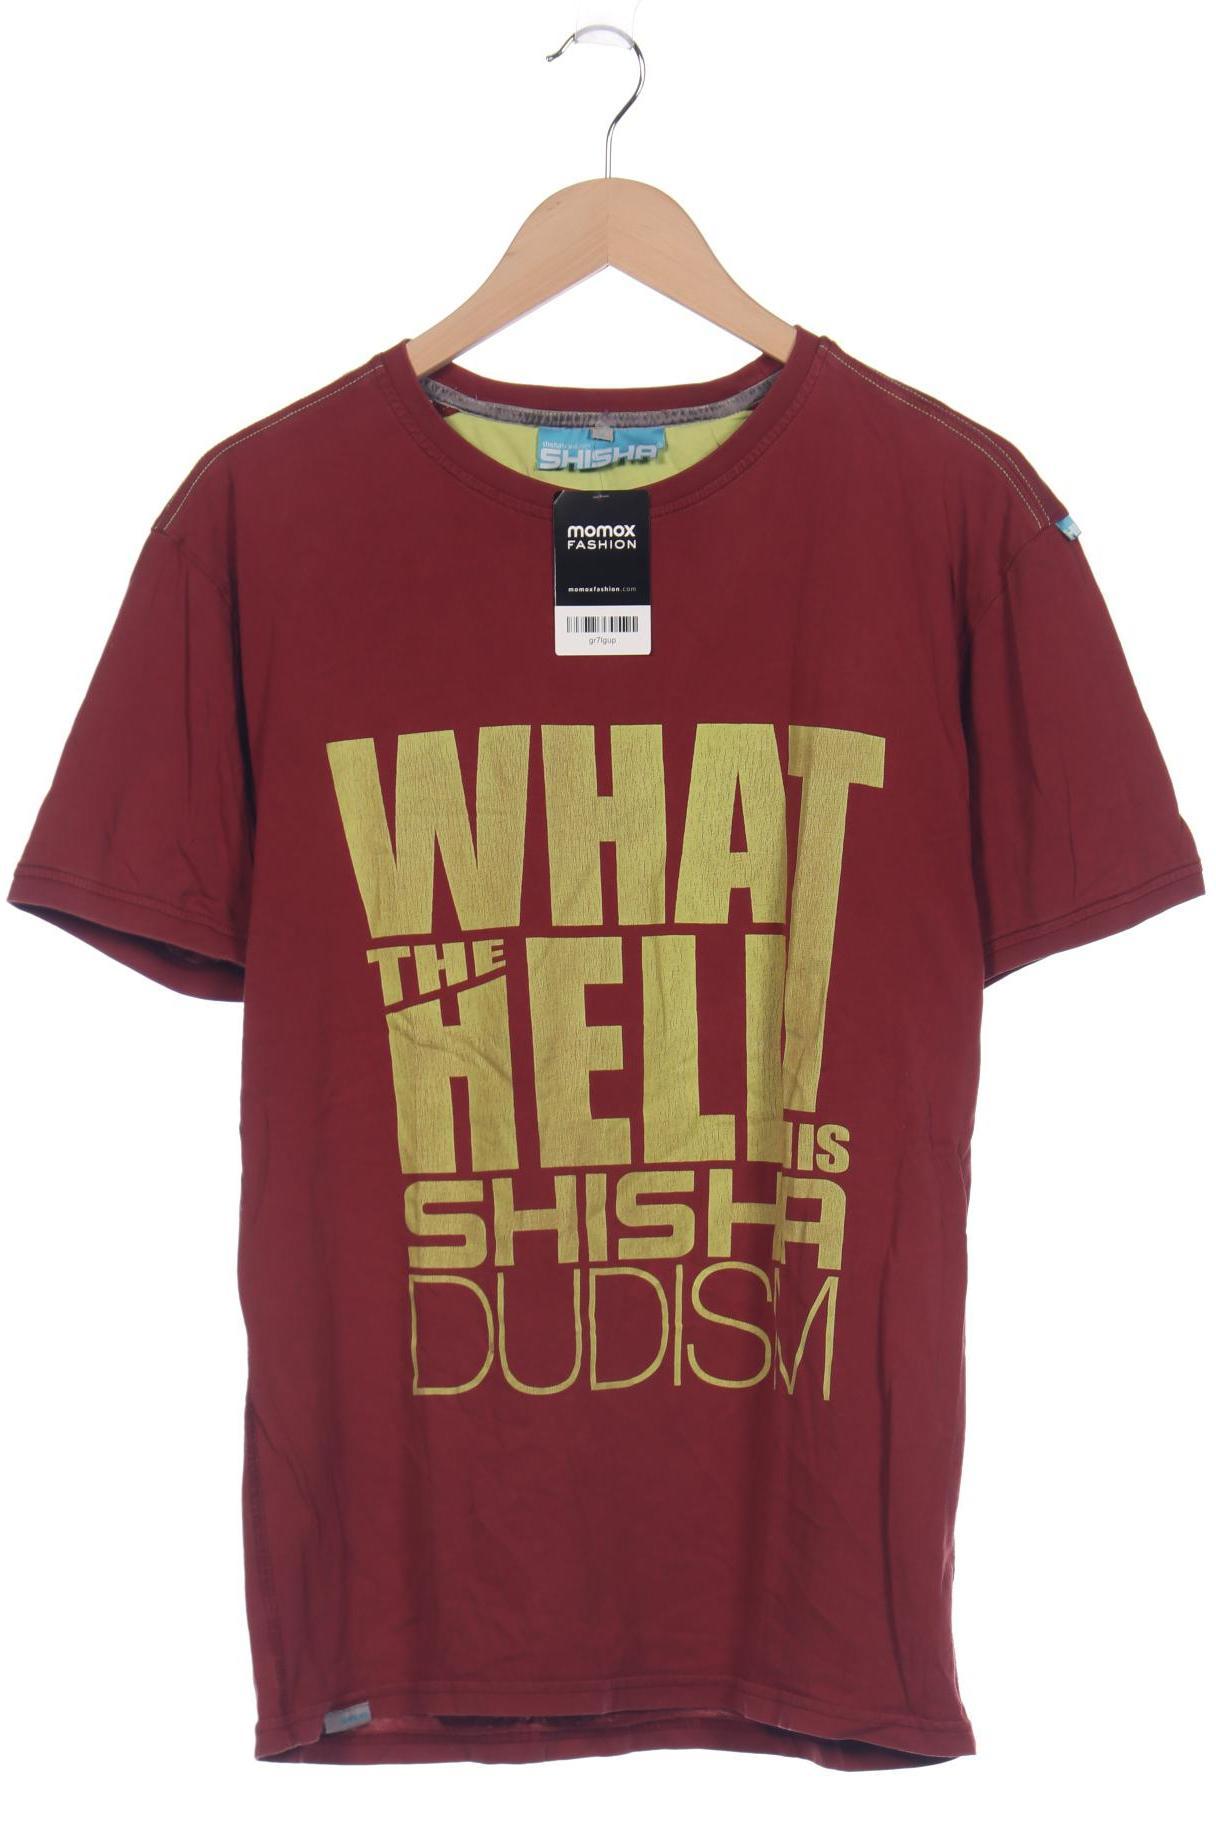 SHISHA Brand Herren T-Shirt, bordeaux